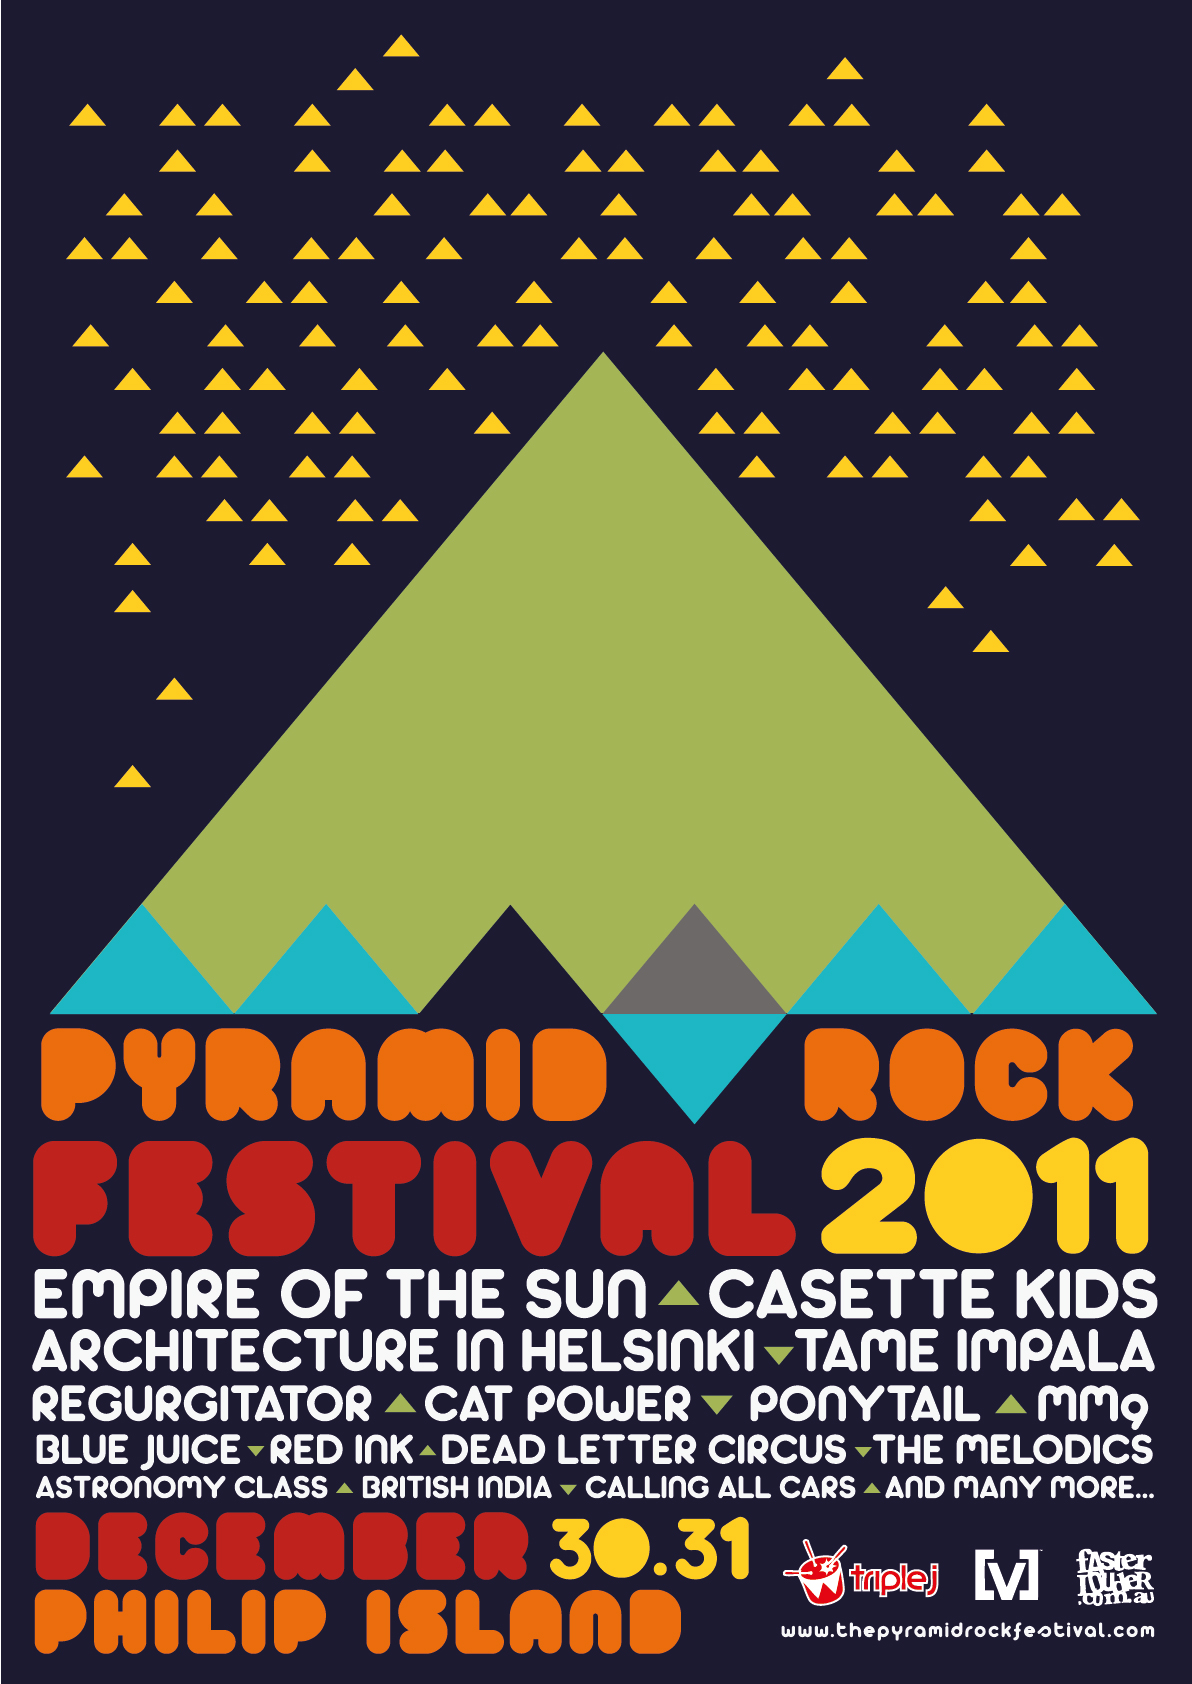 pyramid rock festival Australia poster a2 triangle 1980 inspiration 1980s folding graphic Poster Design minimalistic basic shape Basic